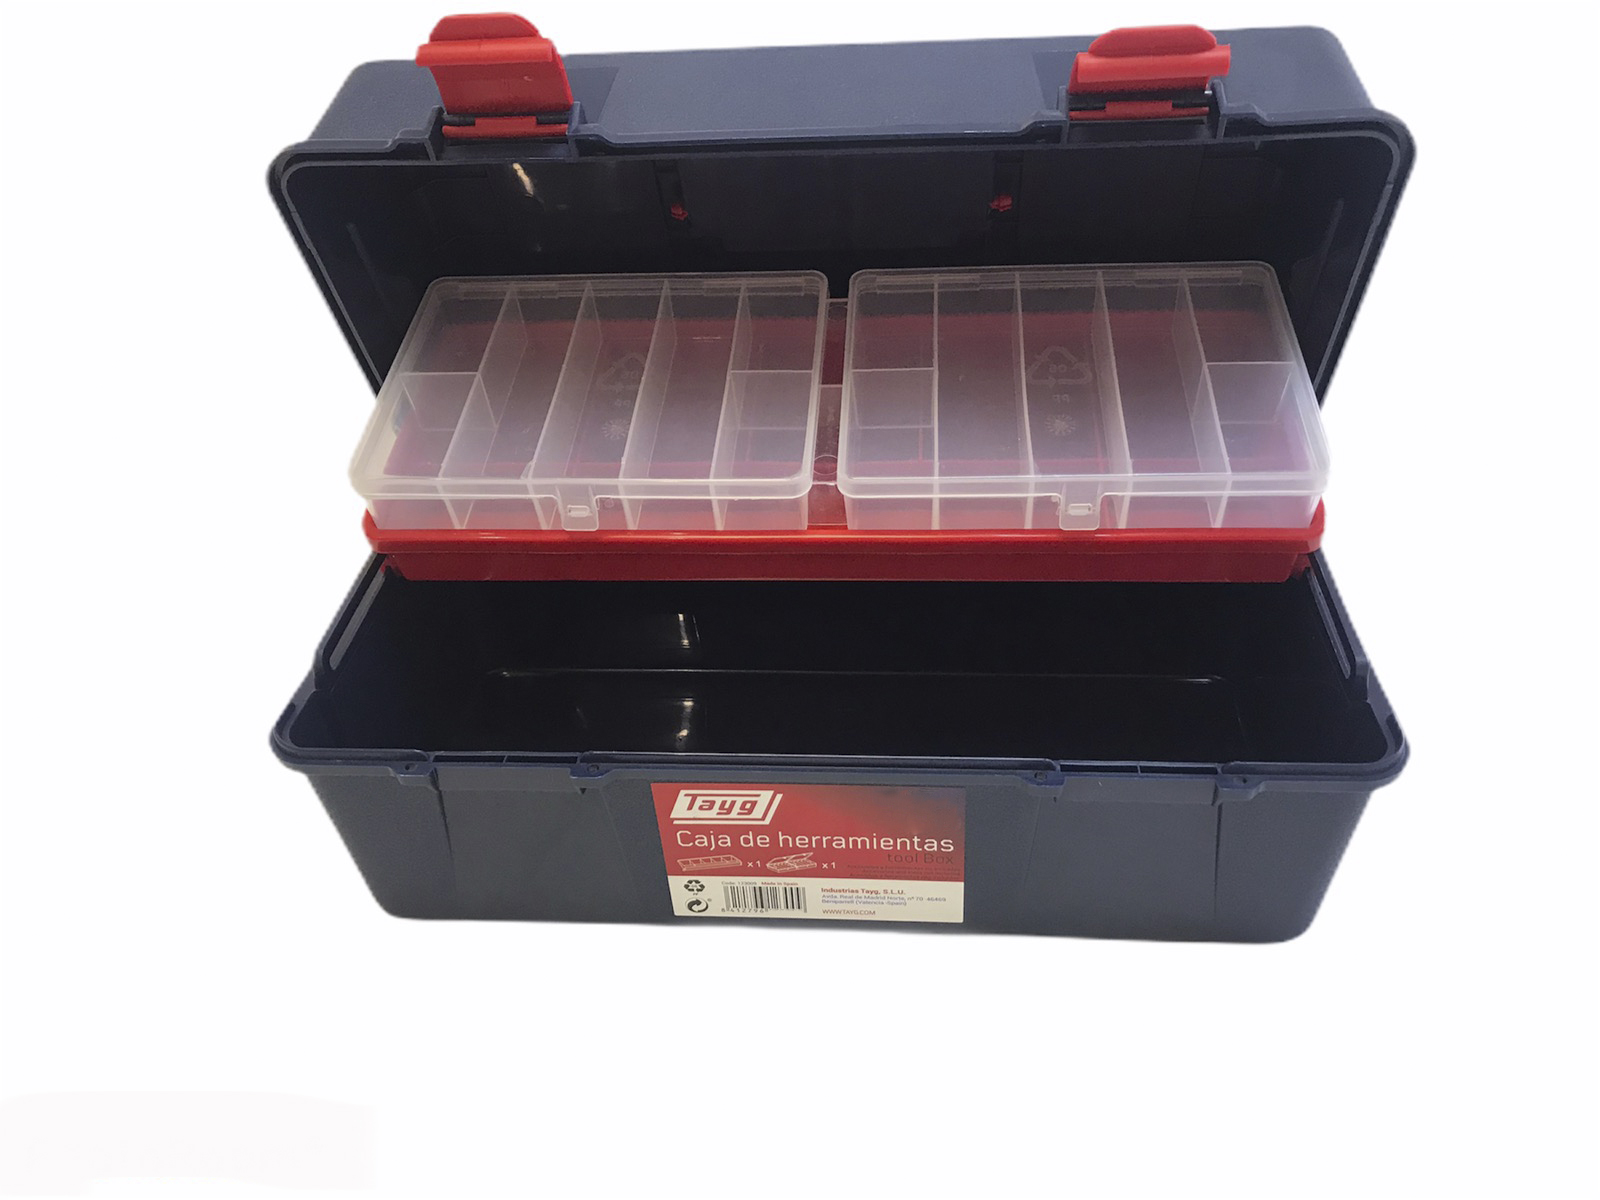 Ящик пластиковый для инструментов Tayg Box 25 Caja htas, с 2 органайзерами, 40х20,6х18,8 см, синий (125003) - фото 2